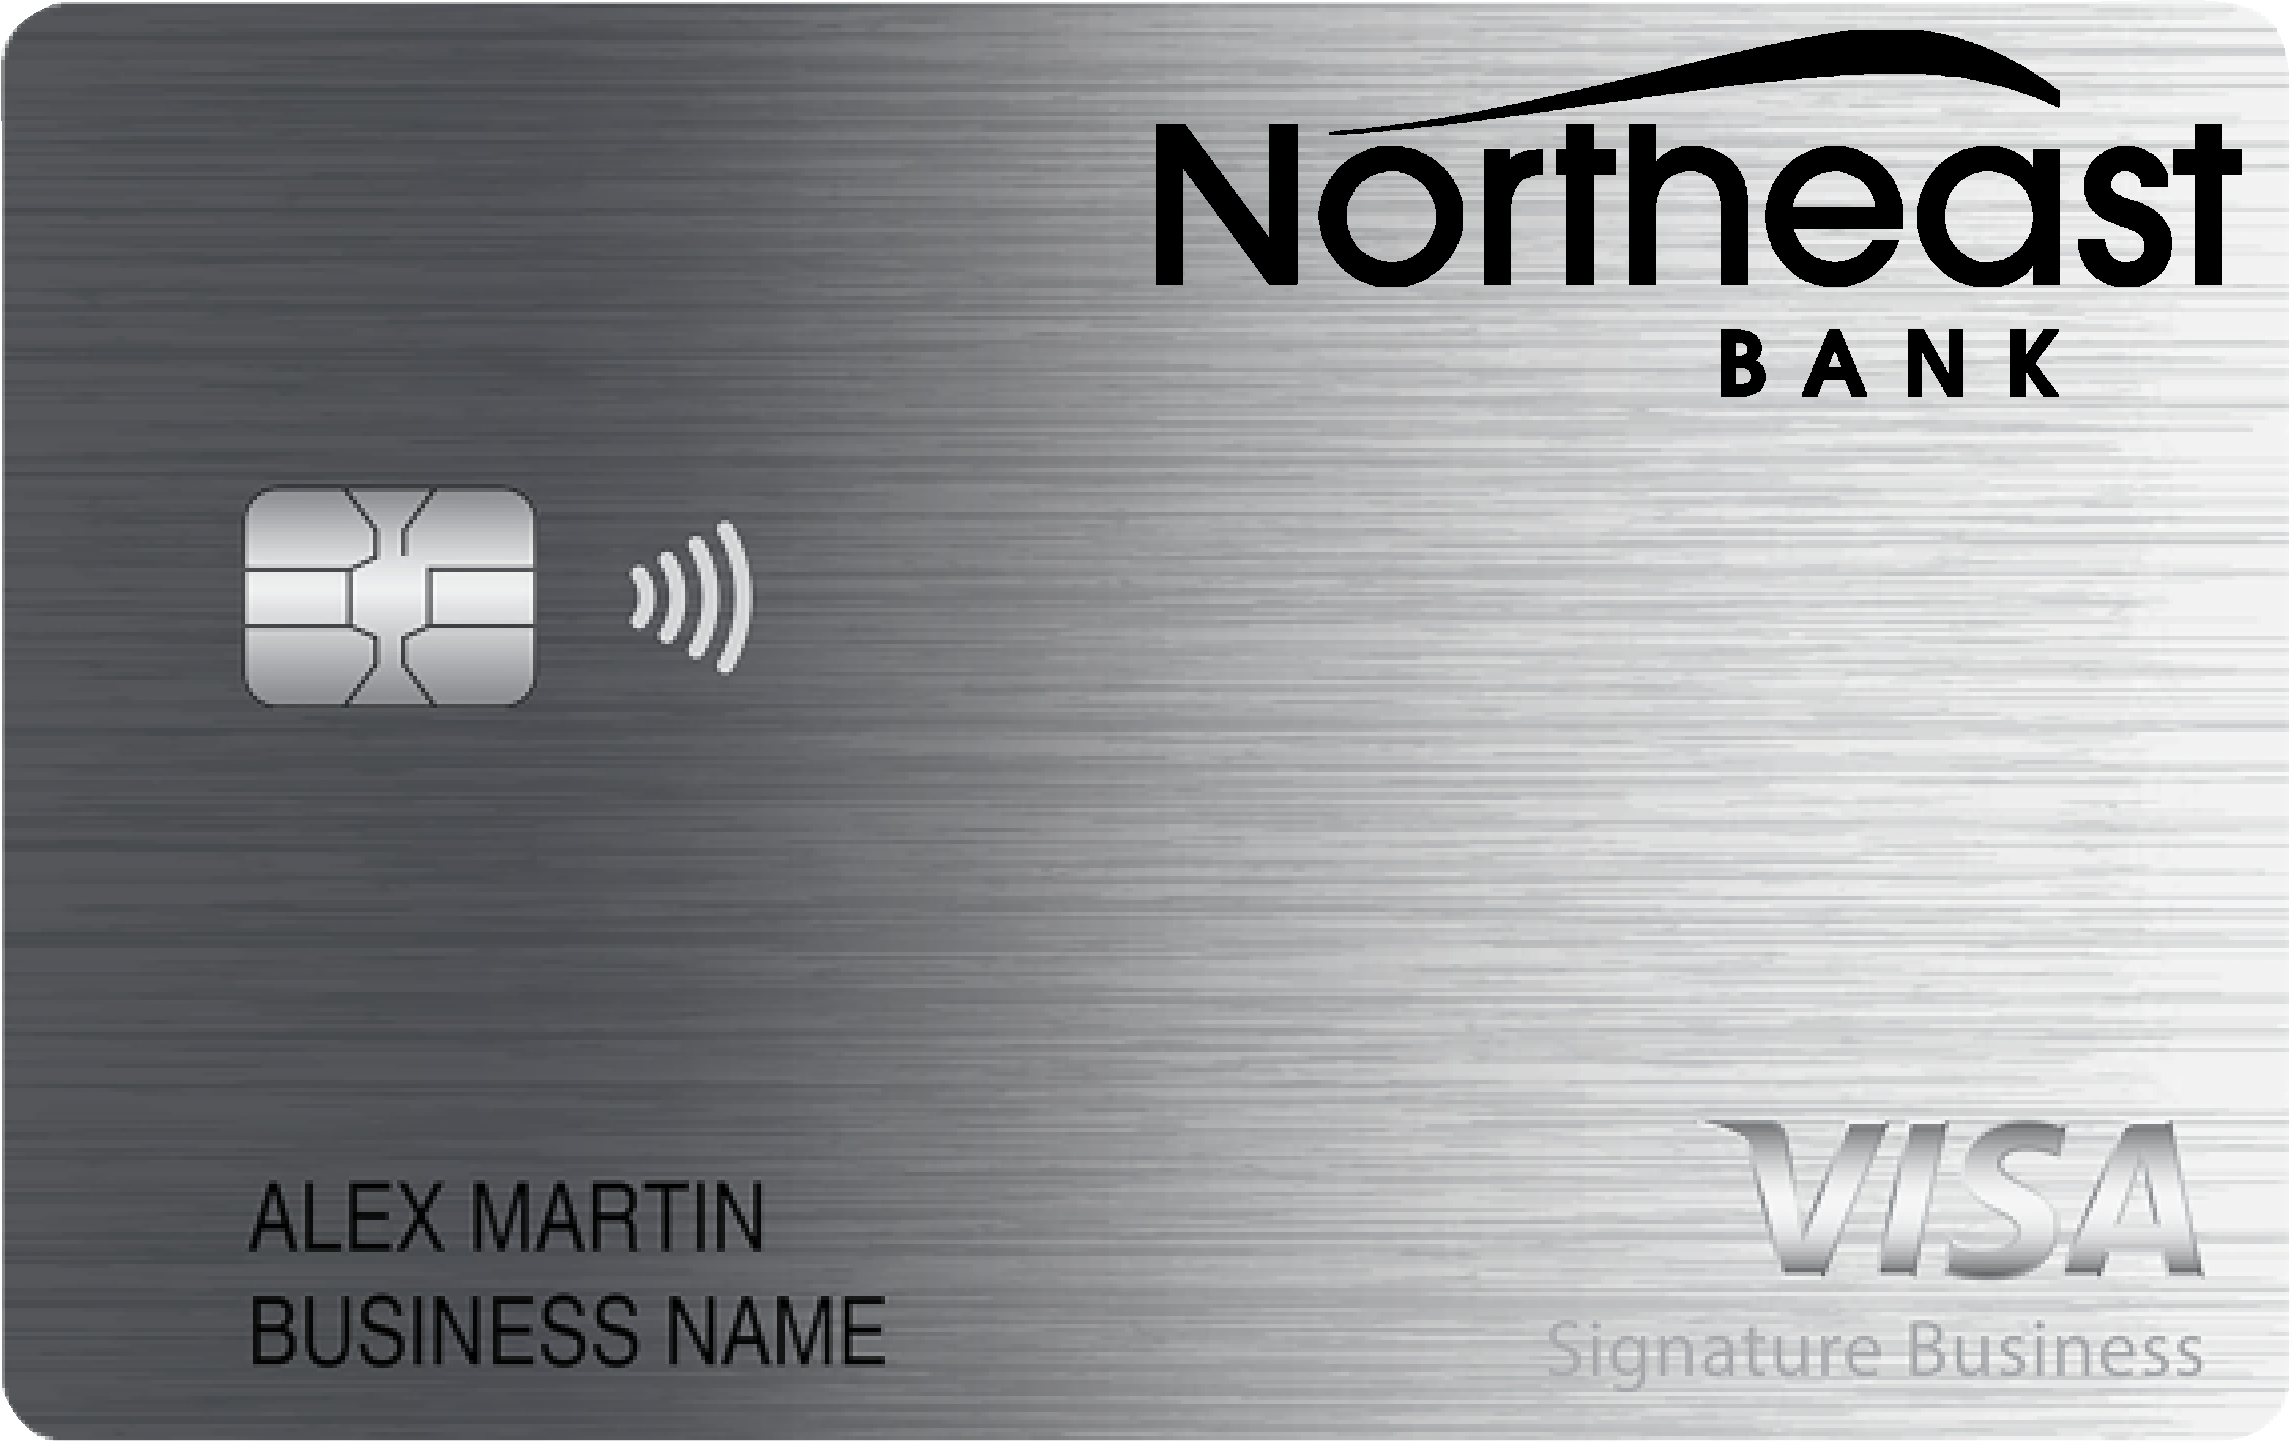 Northeast Bank Smart Business Rewards Card